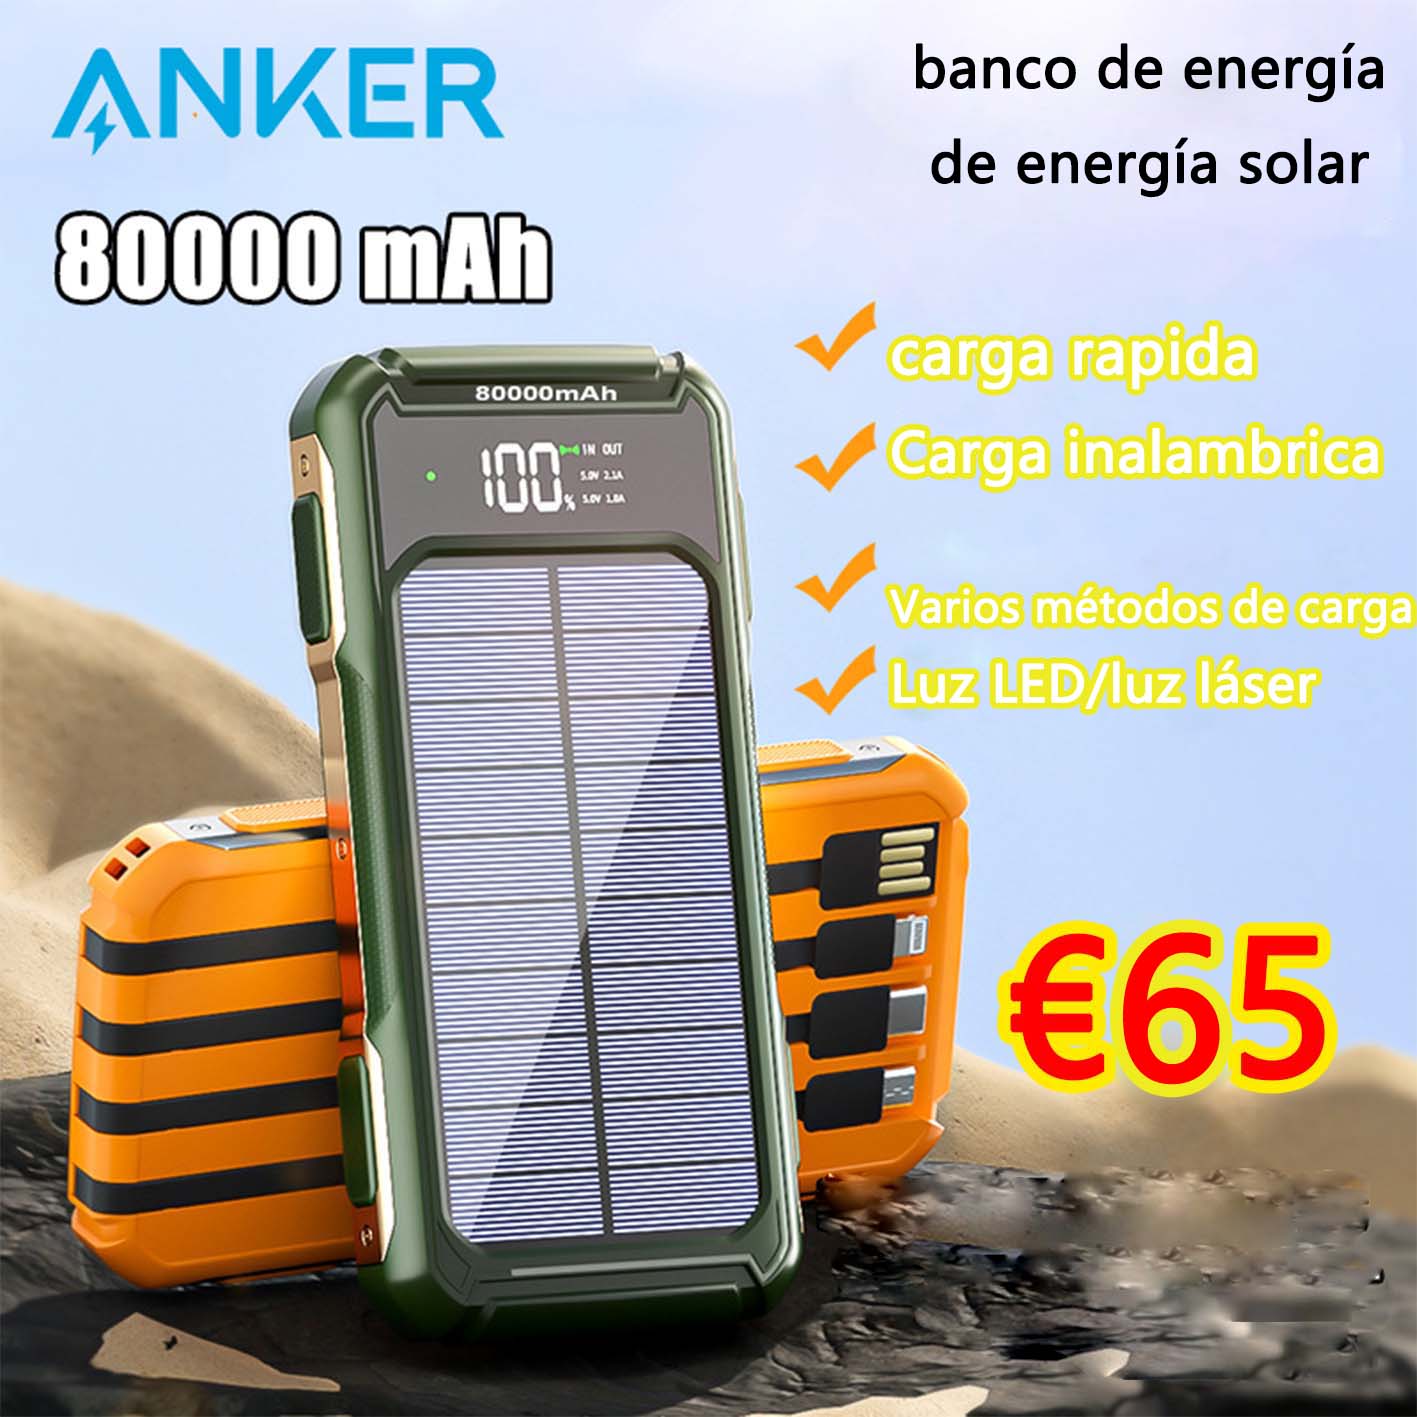 Banco de energía solar Anker 80000mAh para equipos de combate al aire libre